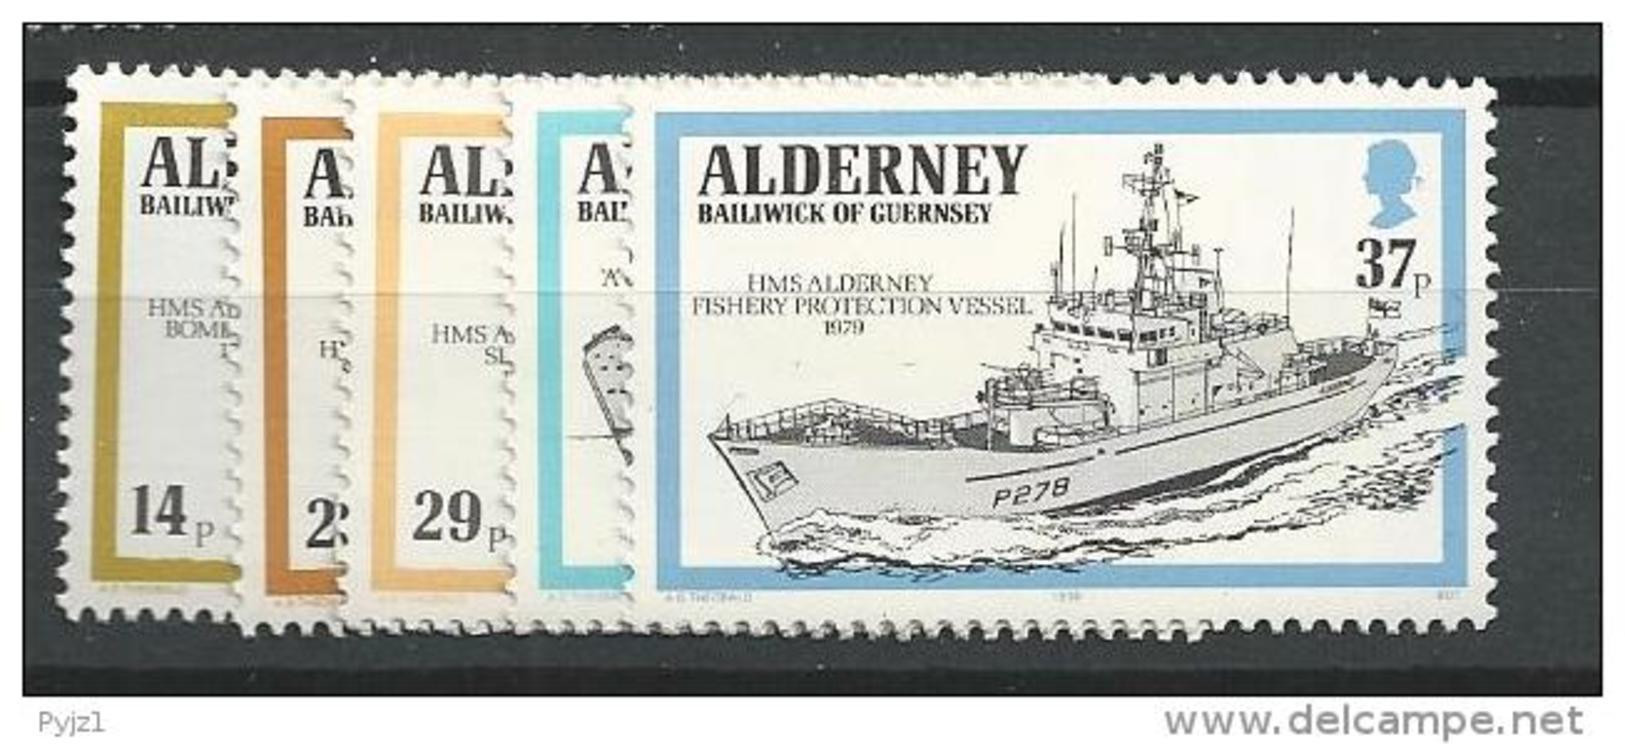 1990 MNH Alderney Postfris - Schiffahrt